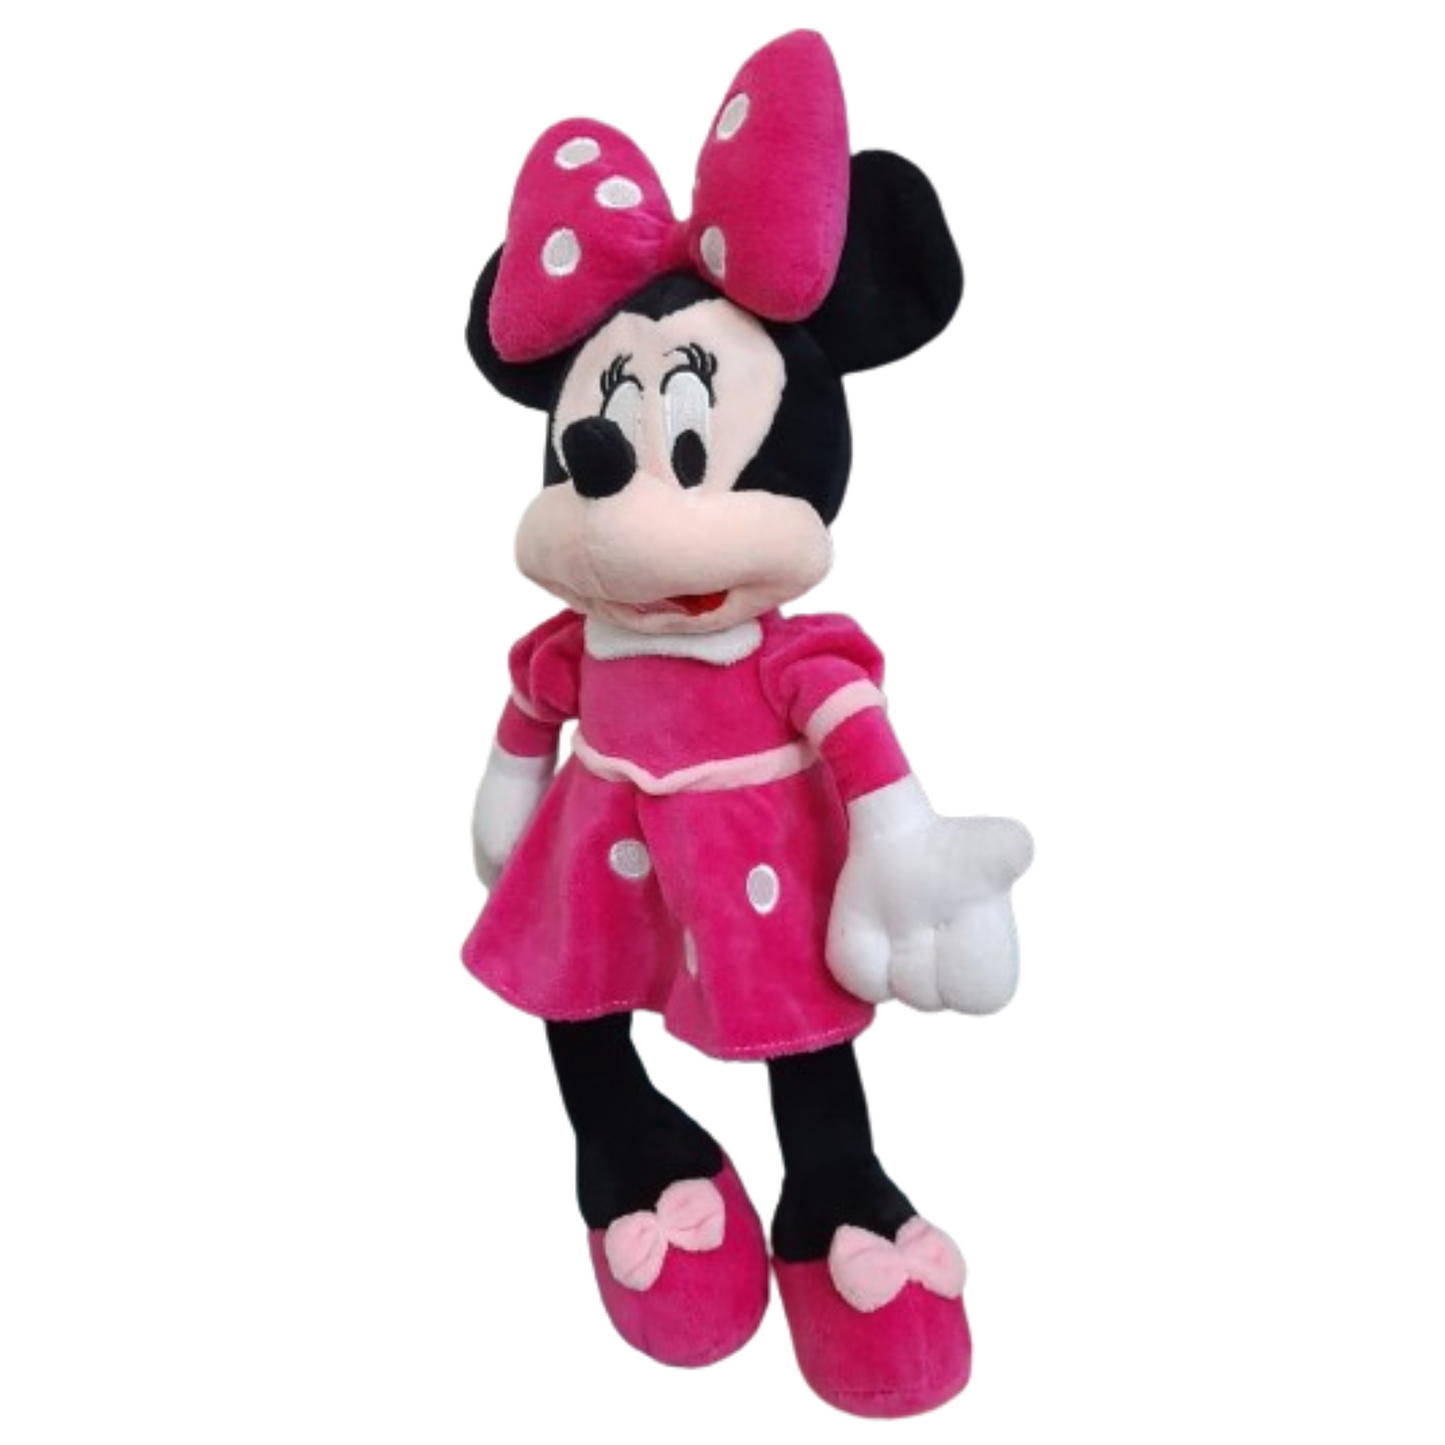 Mini- Mouse Stuffed Toy